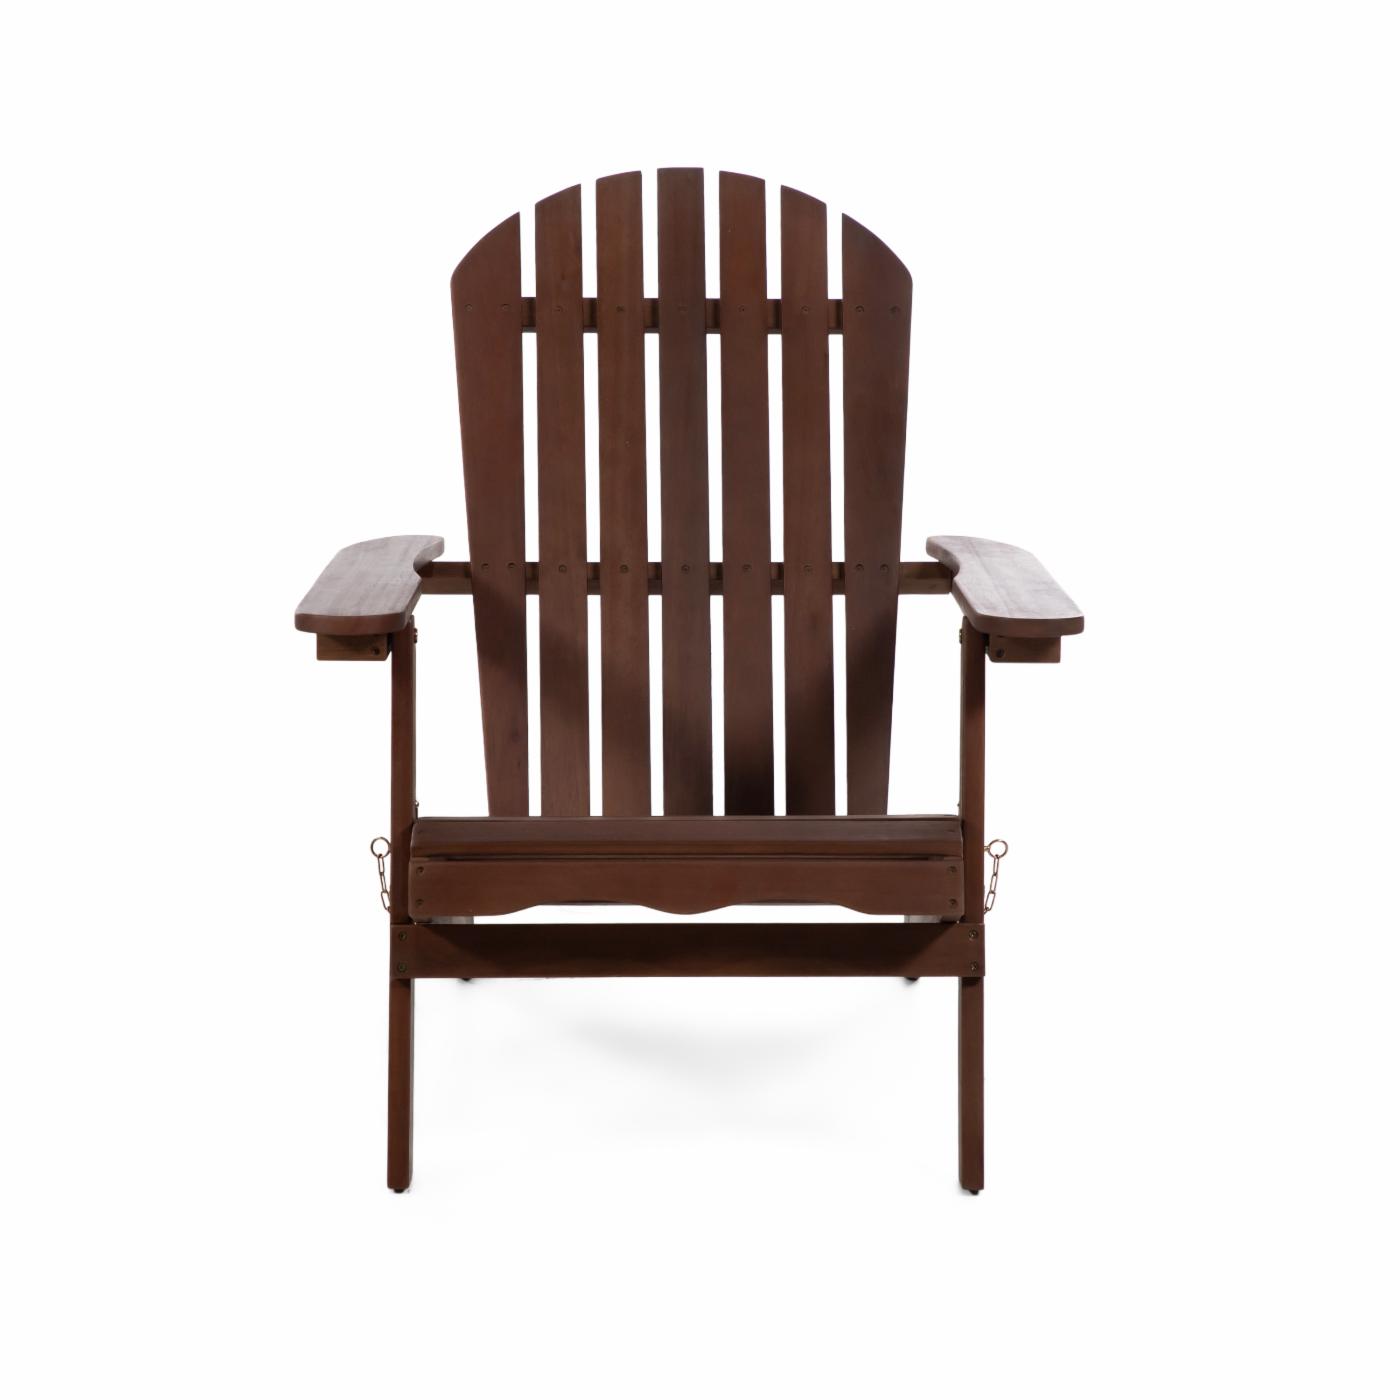 Solid Eucalyptus Wood Folding Adirondack Chair - Dark Walnut